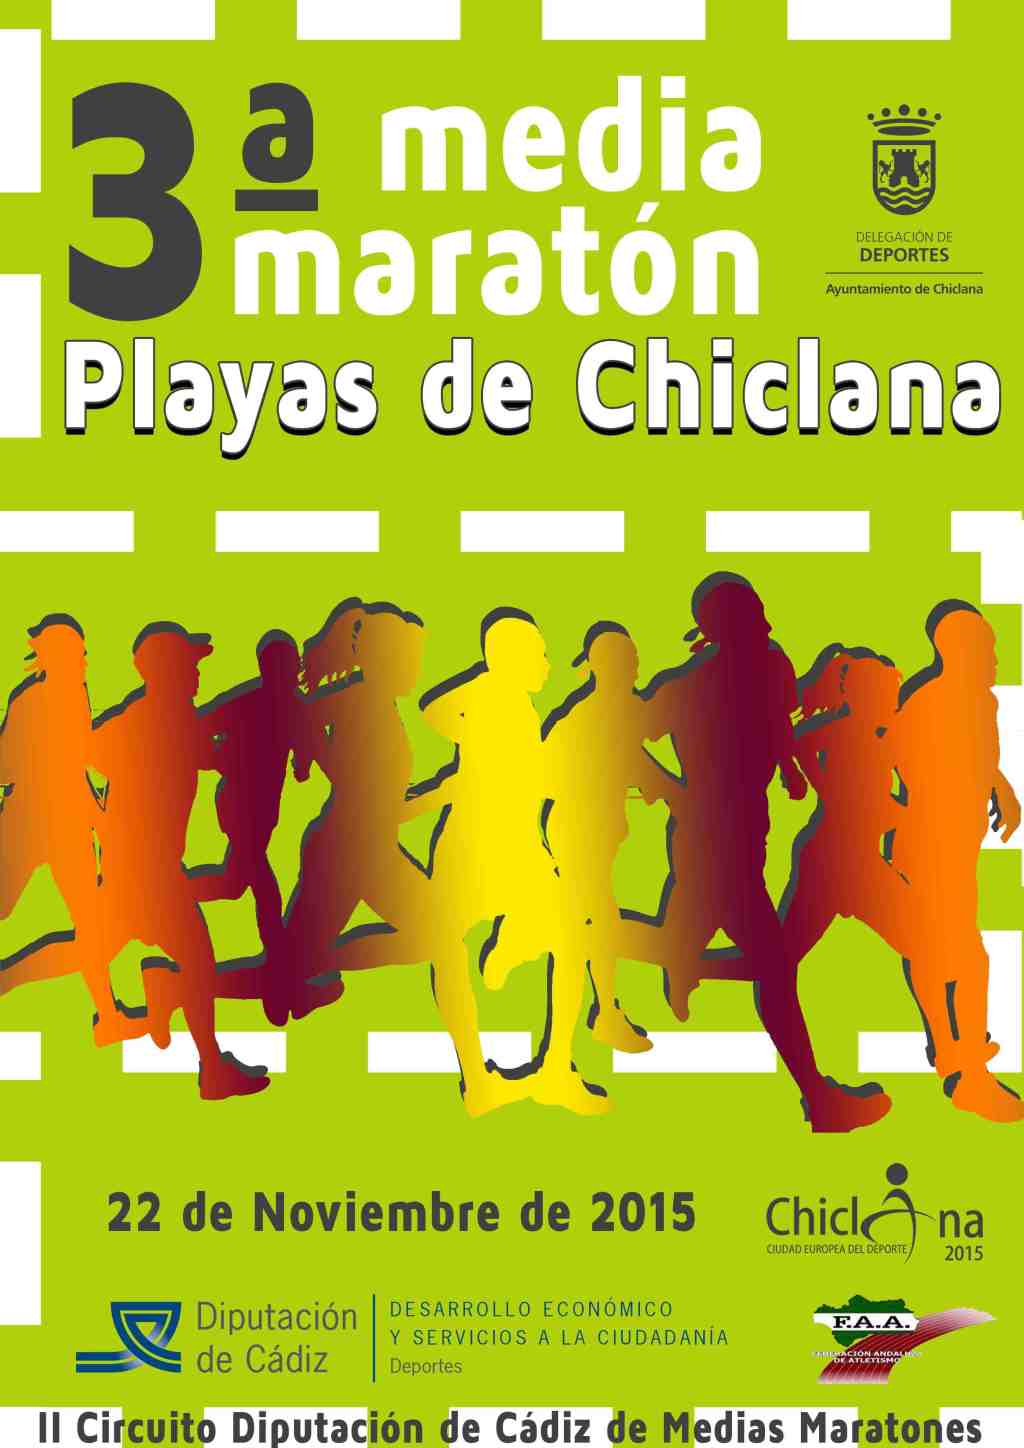 3ª media maratÃ³n PLAYAS DE CHICLANA